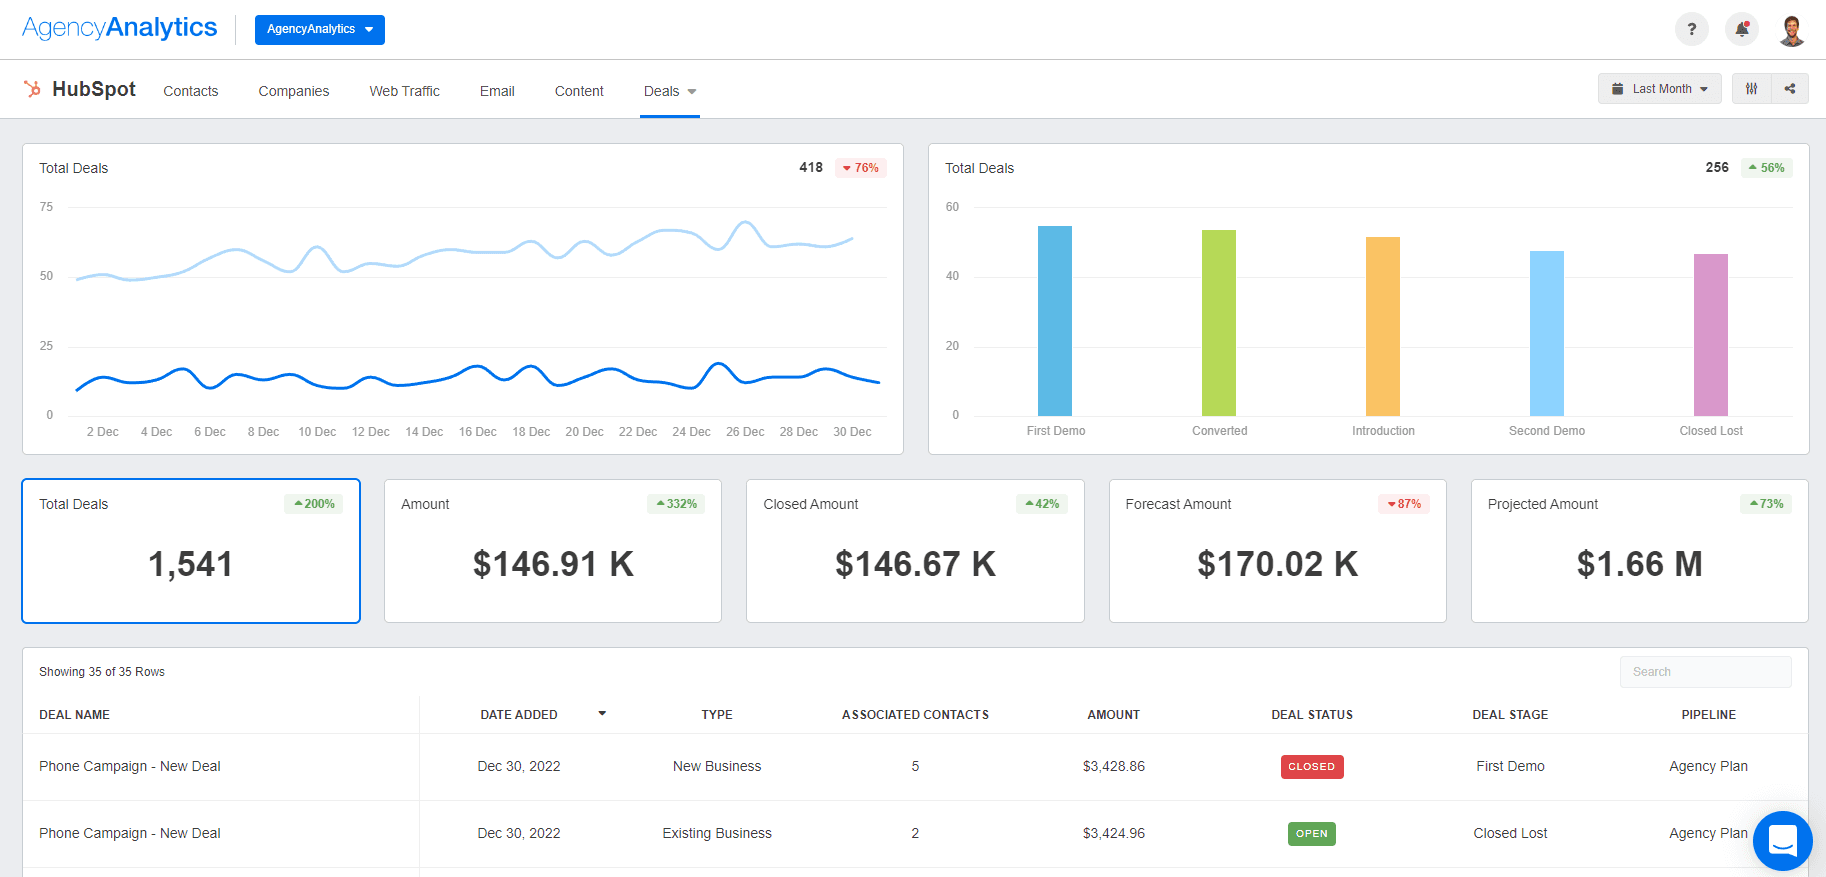 AgencyAnalytics - HubSpot Deals Dashboard